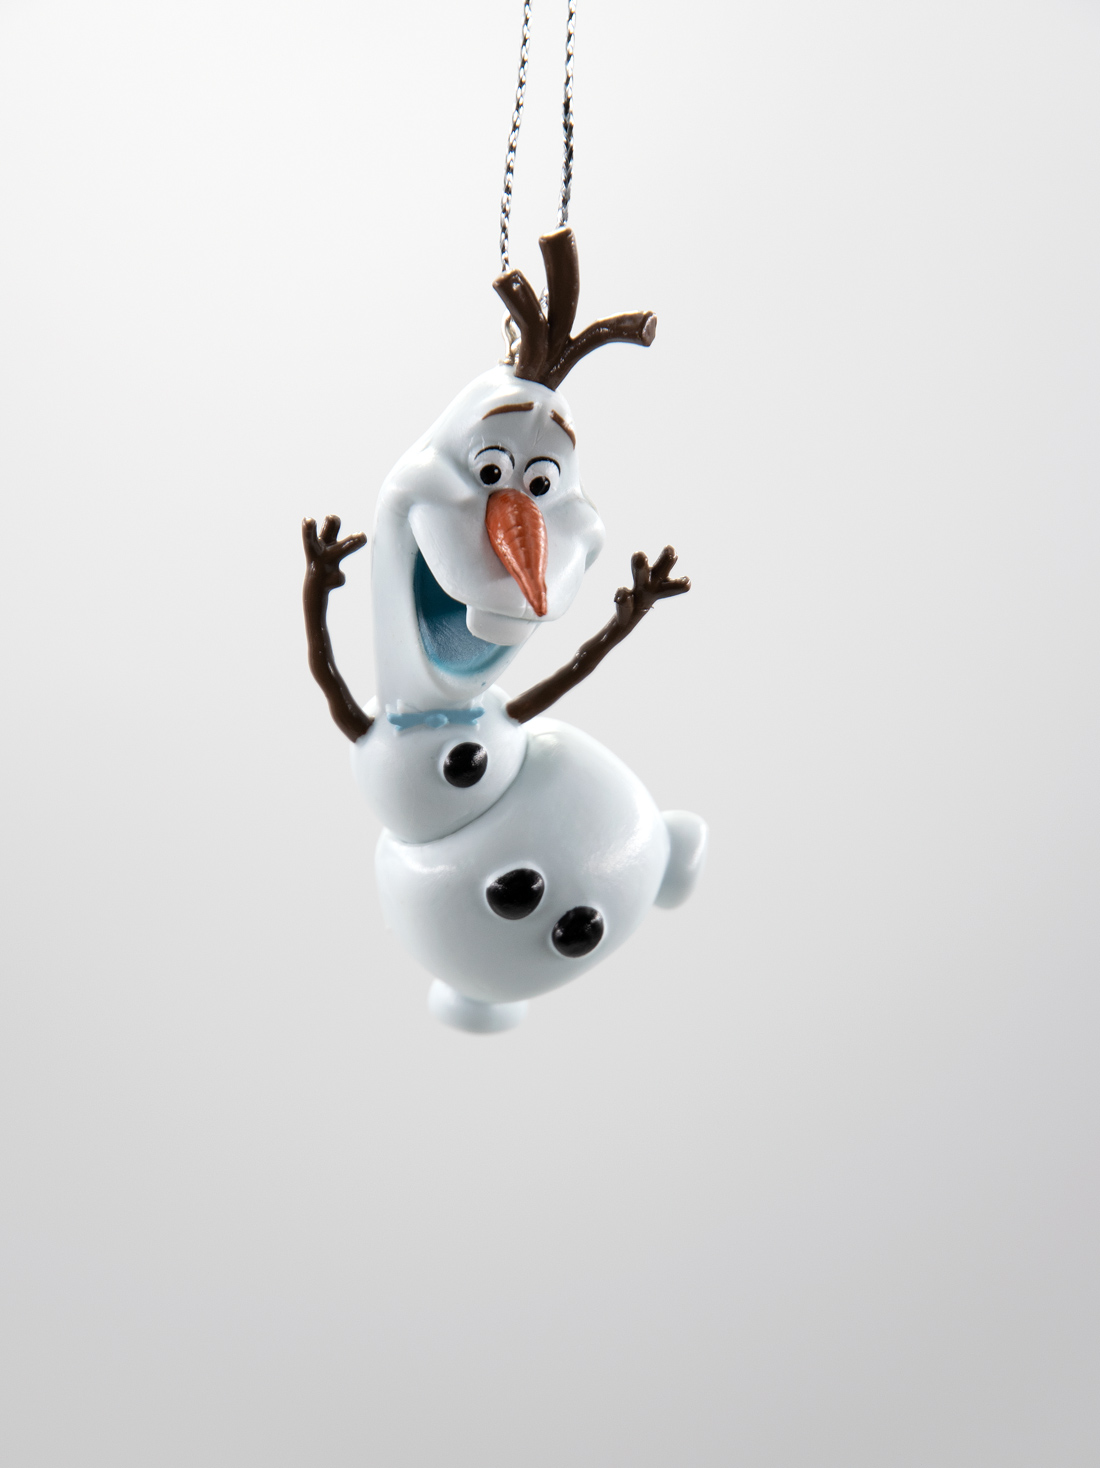 Kurt S. Adler Disney Frozen Olaf Weihnachtsschmuck 